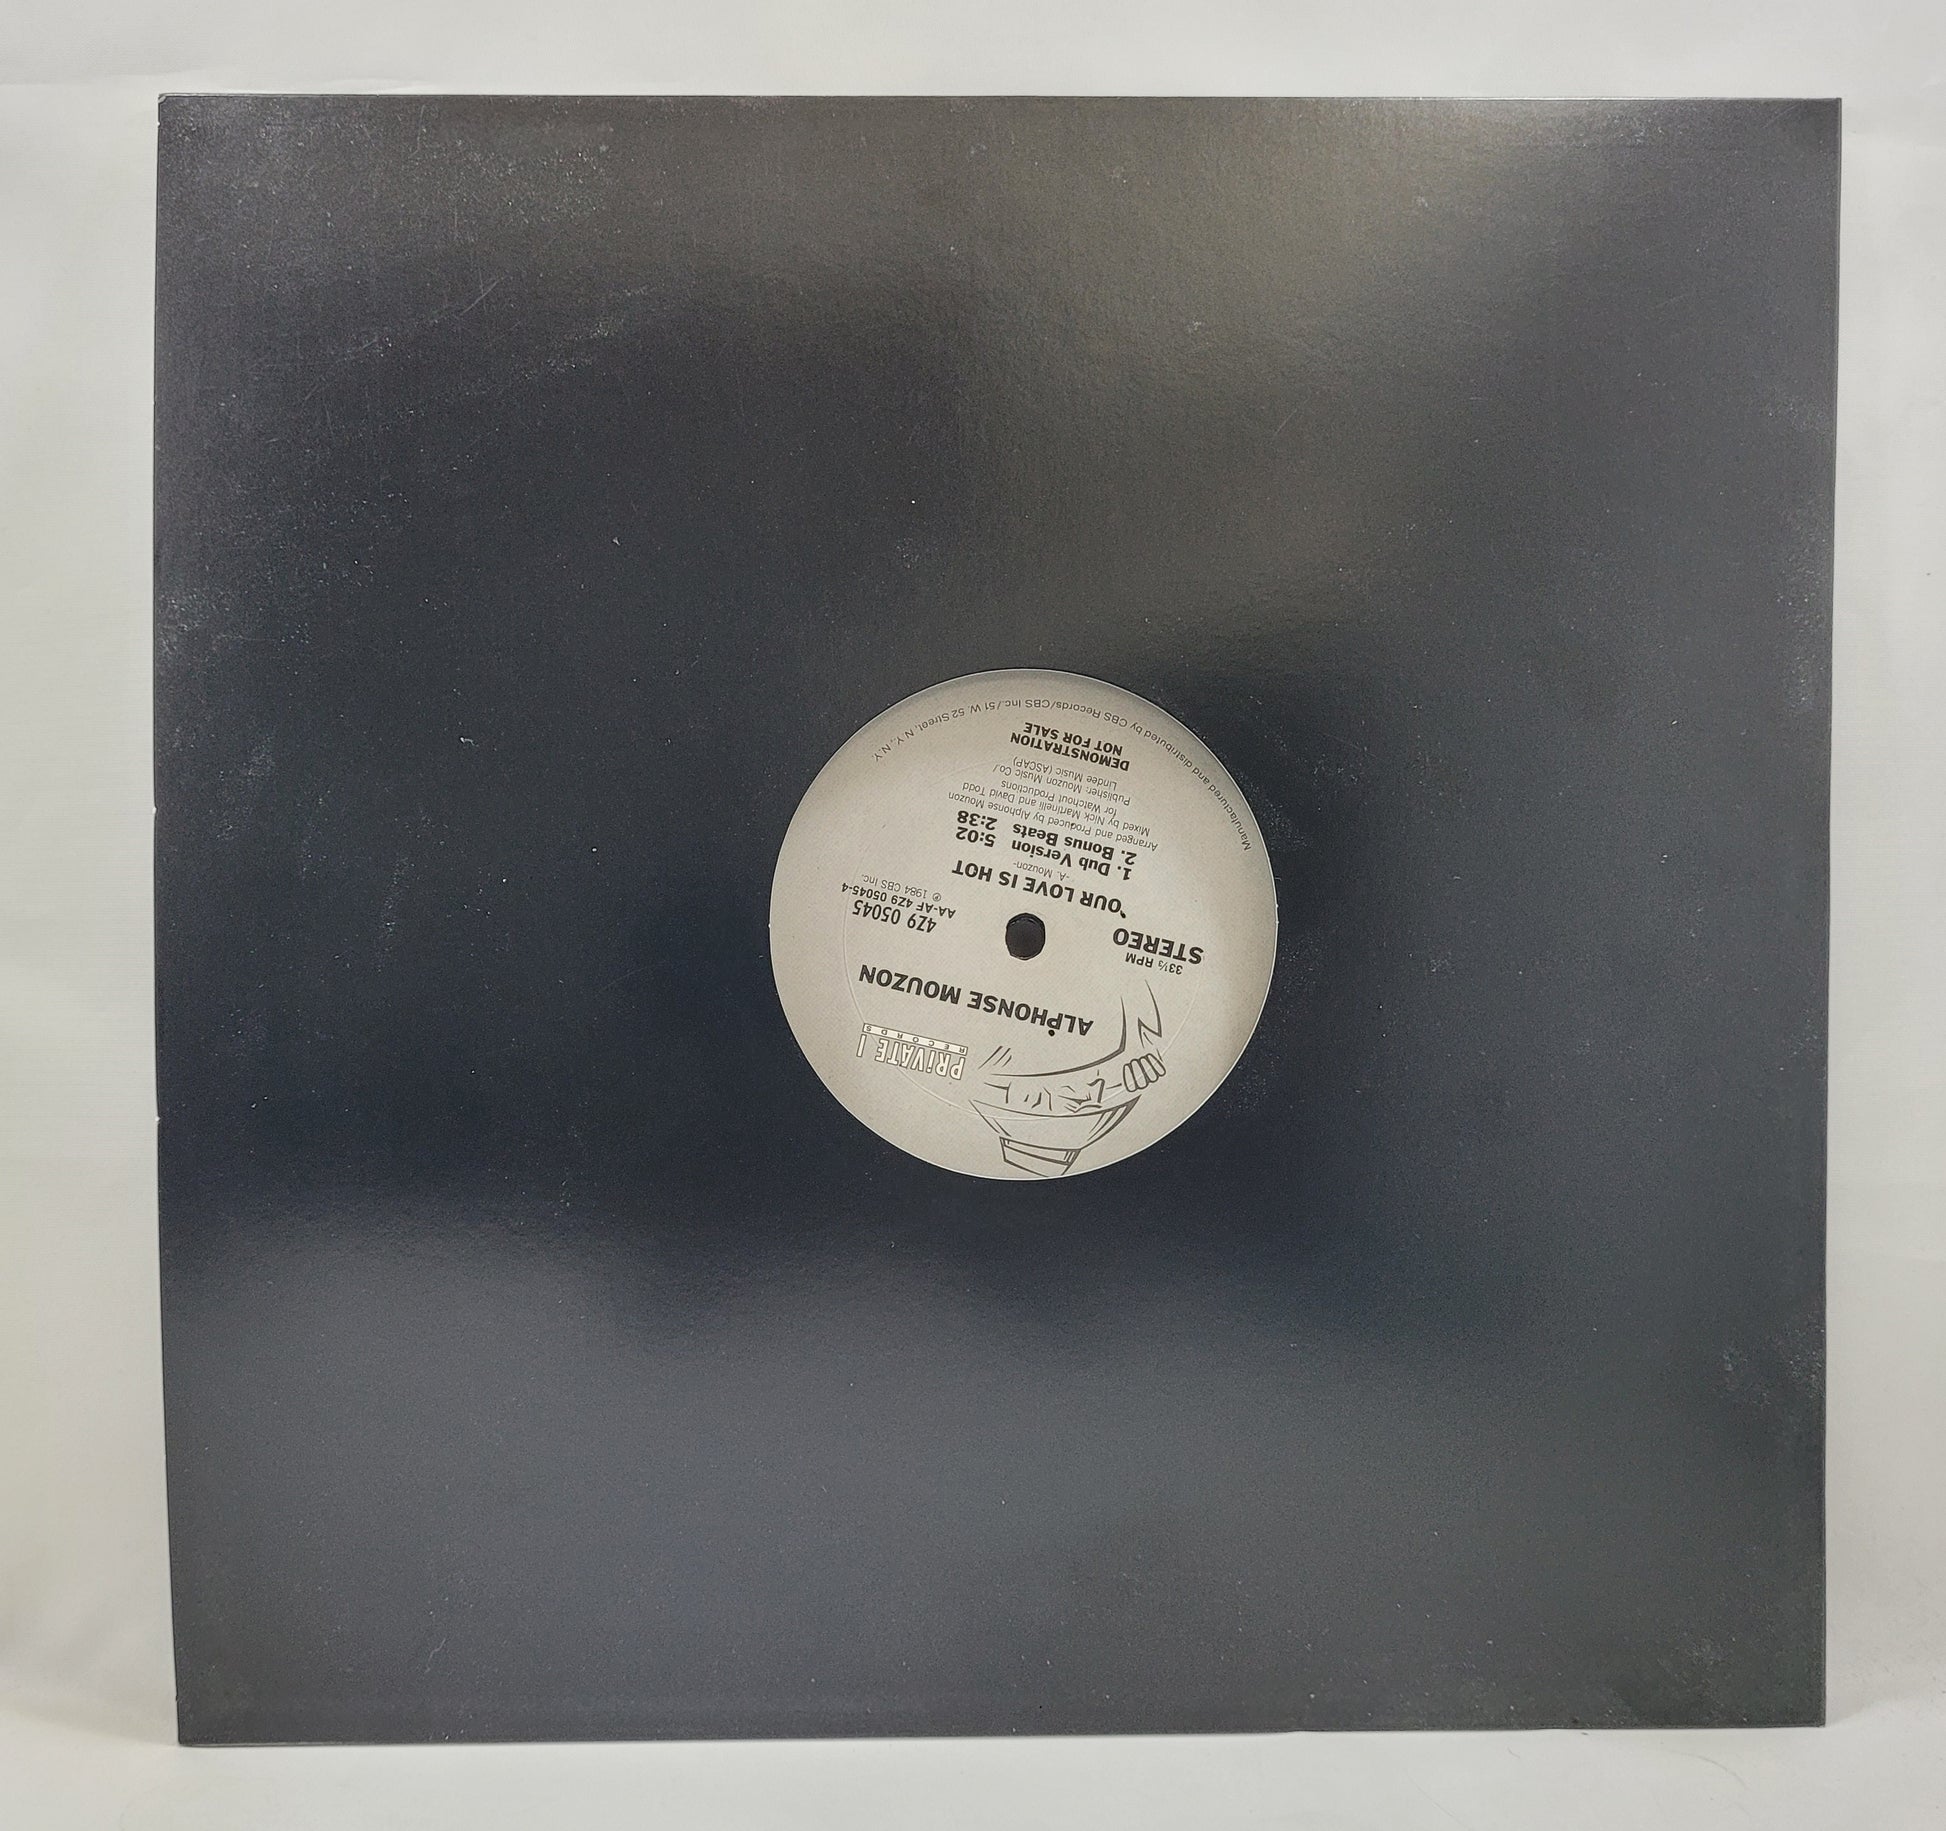 Alphonse Mouzon Feat. Carol Dennis - Our Love Is Hot [1984 Promo] [Used Vinyl Record 12" Single]